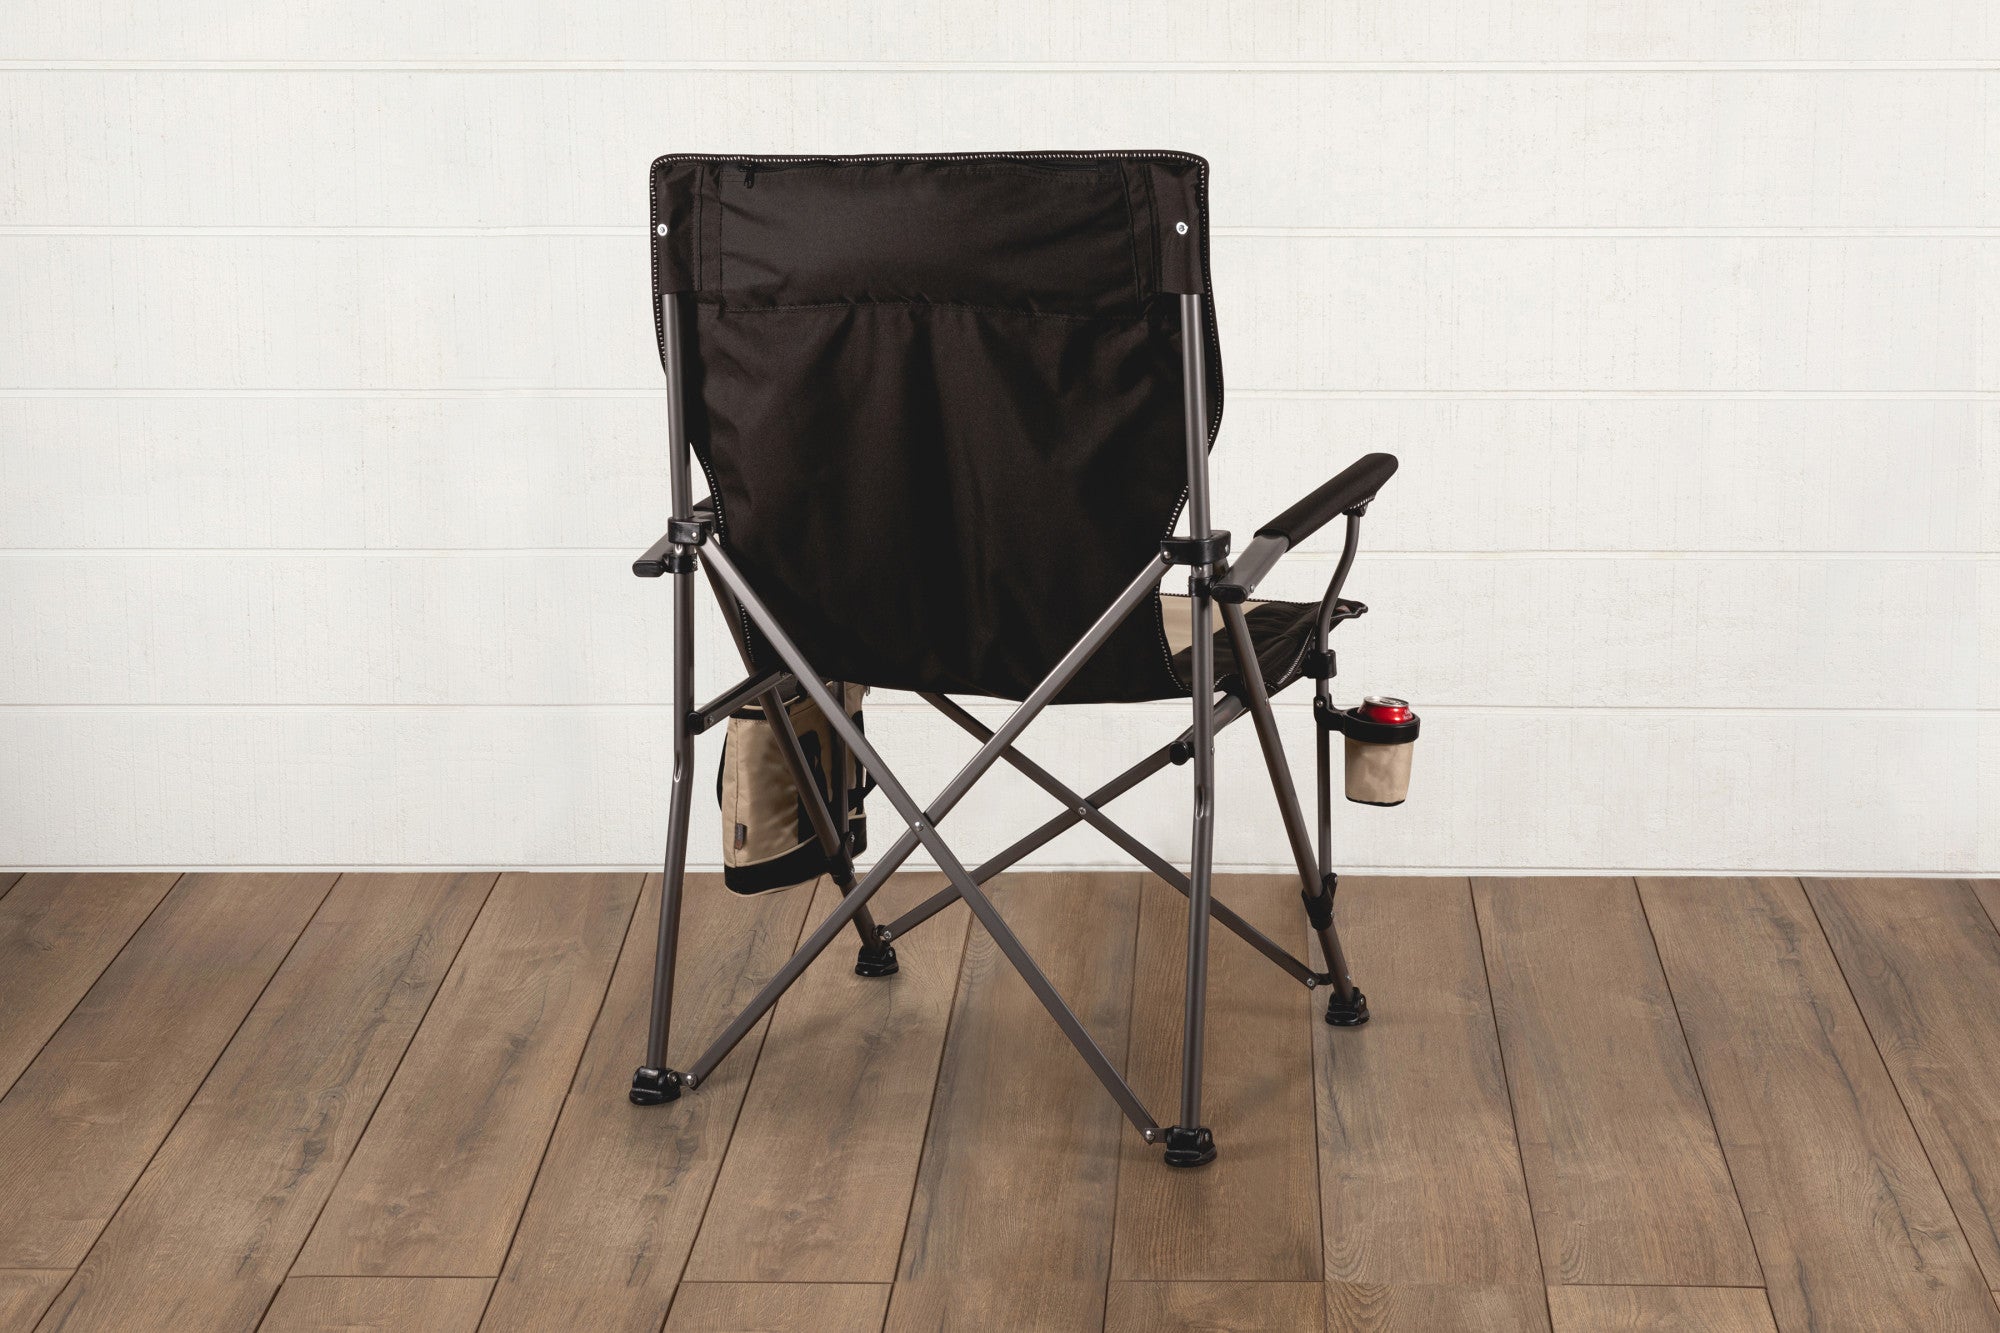 Jacksonville Jaguars - Big Bear XXL Camping Chair with Cooler